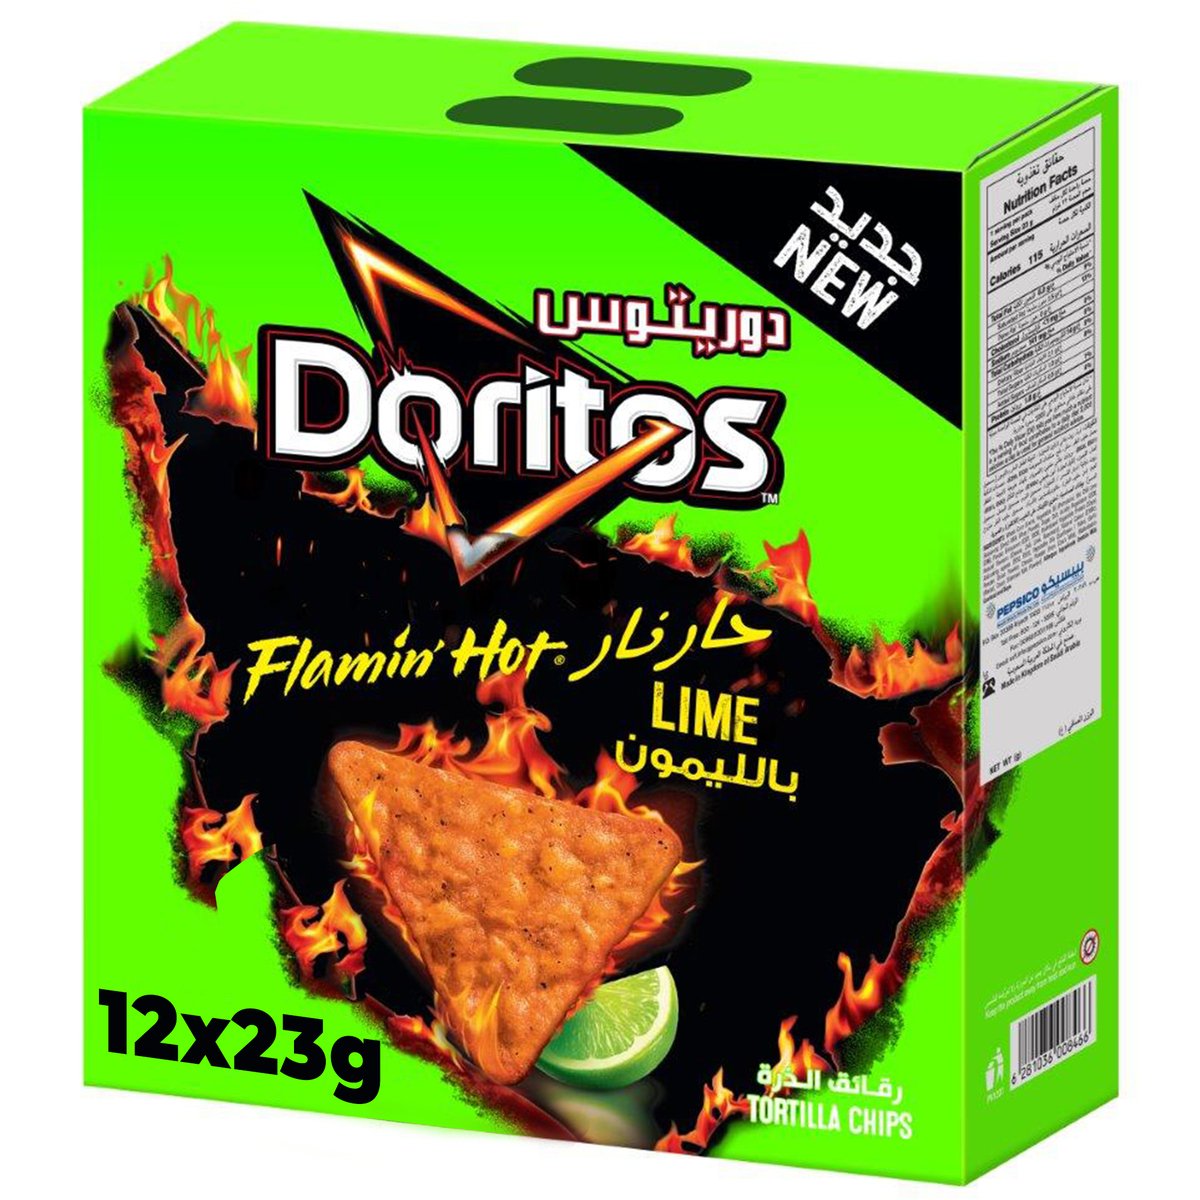 Doritos Flamin Hot Lime Tortilla Chips 23 g